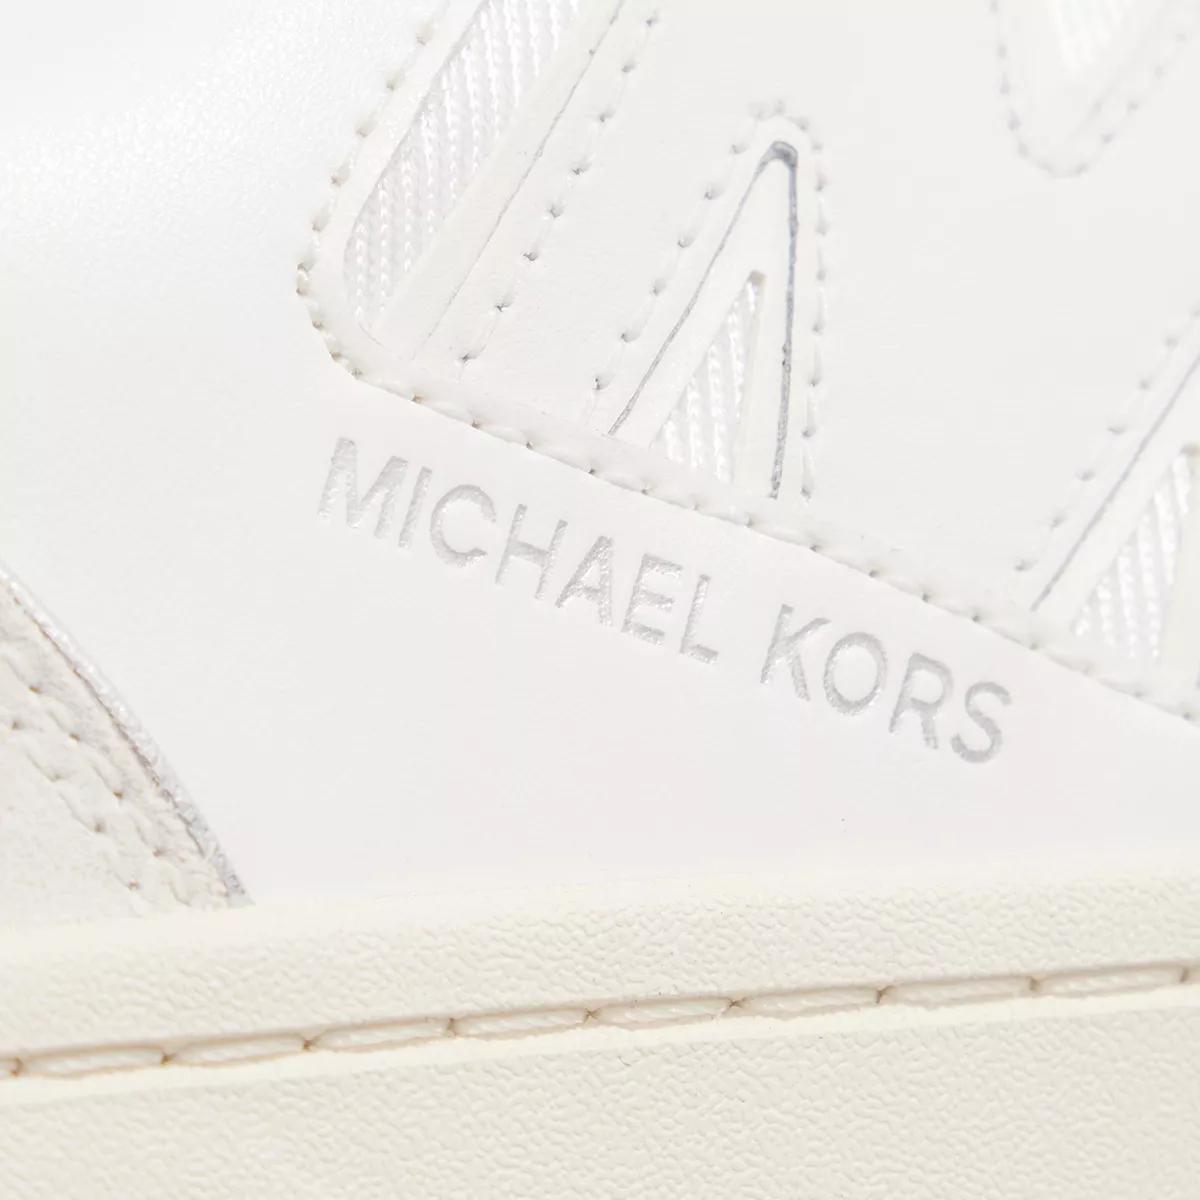 Michael Kors Sneakers - Rebel Lace Up - Gr. 37 (EU) - in Weiß - für Damen von Michael Kors